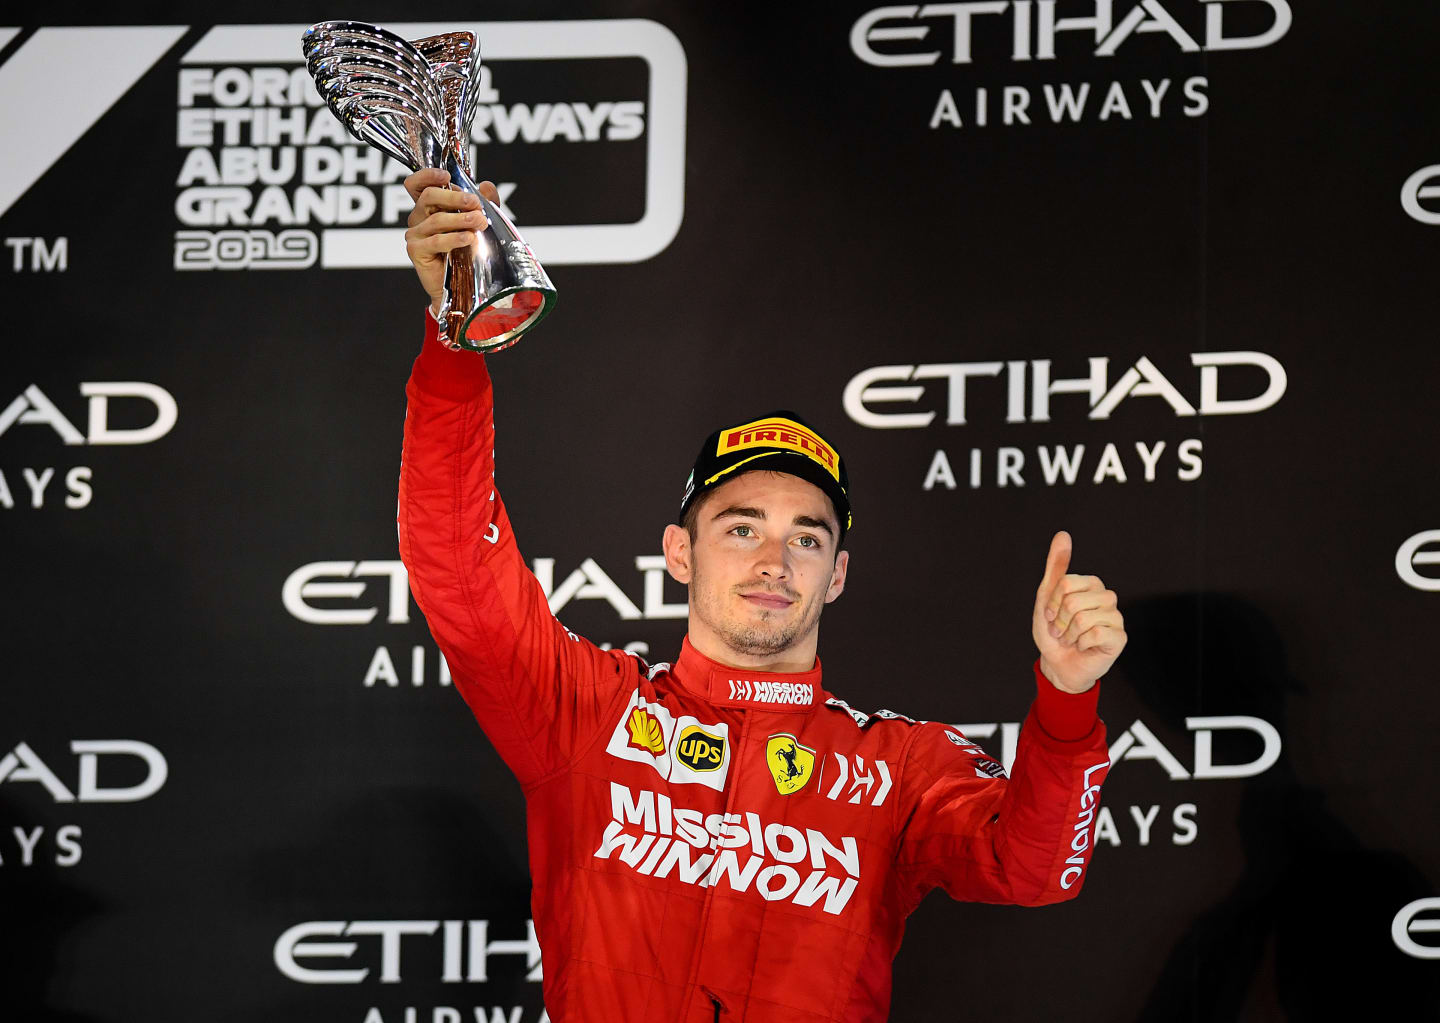 ABU DHABI, UNITED ARAB EMIRATES - DECEMBER 01: Third placed Charles Leclerc of Monaco and Ferrari